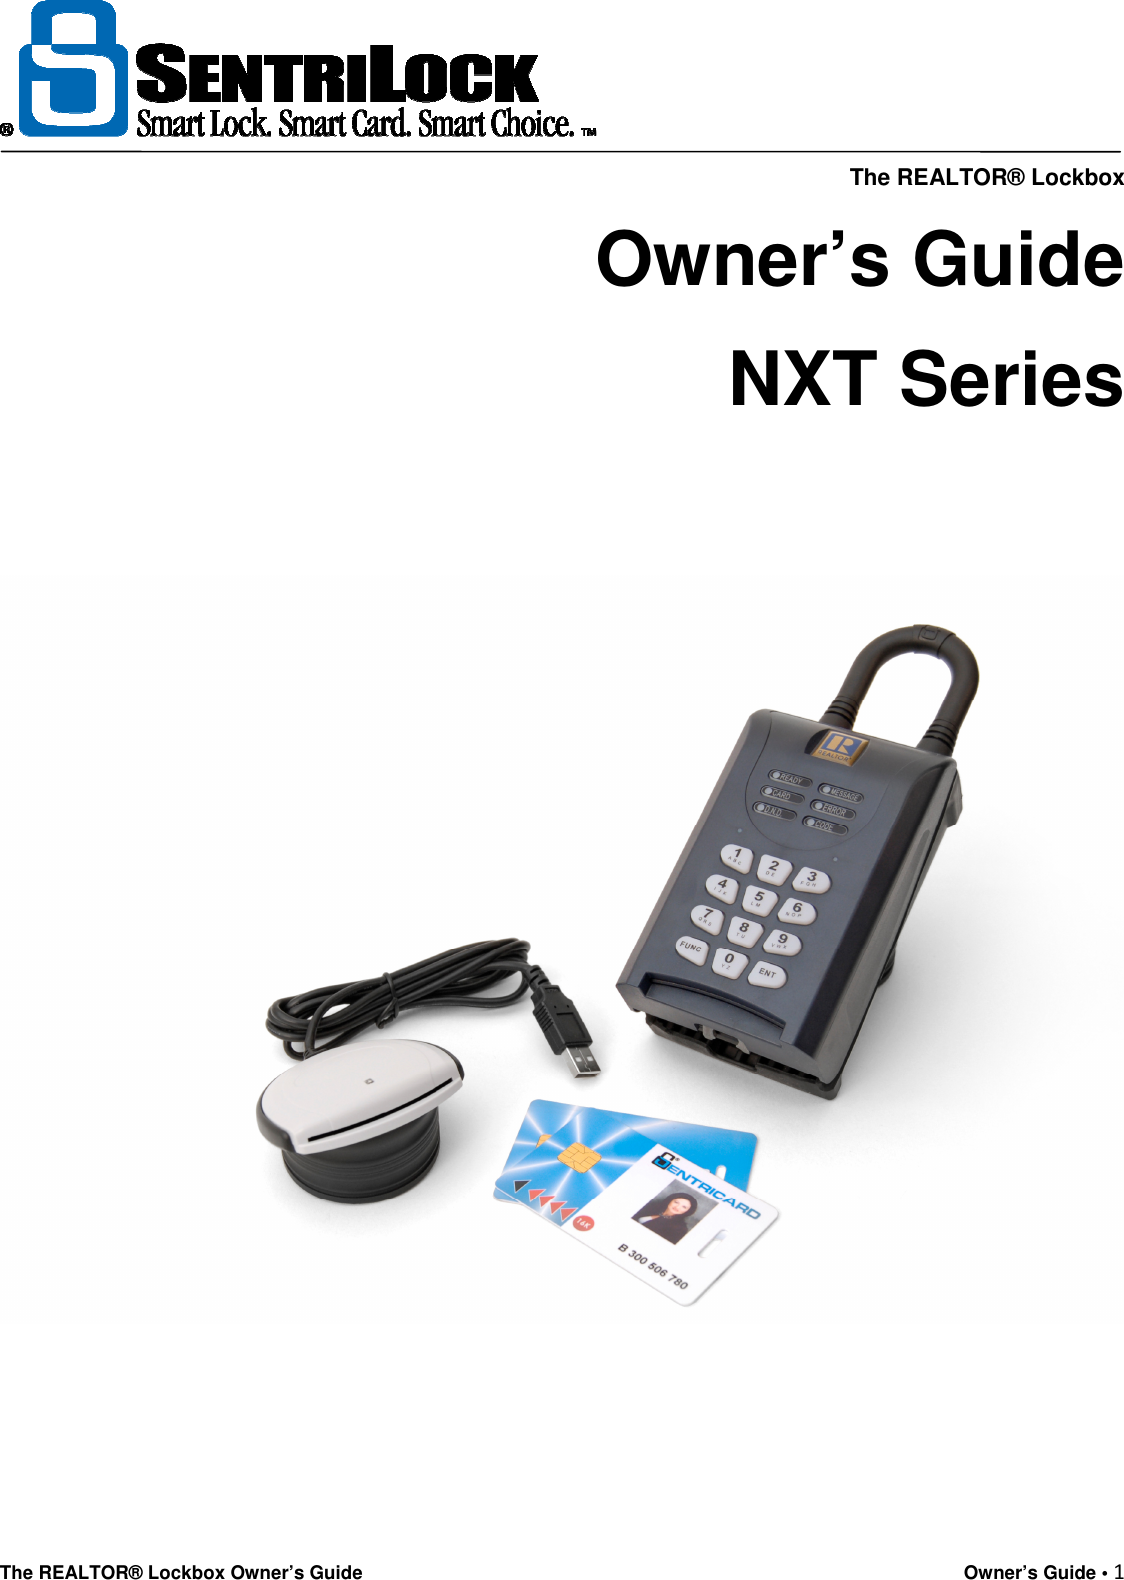     The REALTOR® Lockbox The REALTOR® Lockbox Owner’s Guide    Owner’s Guide • 1      Owner’s Guide NXT Series     